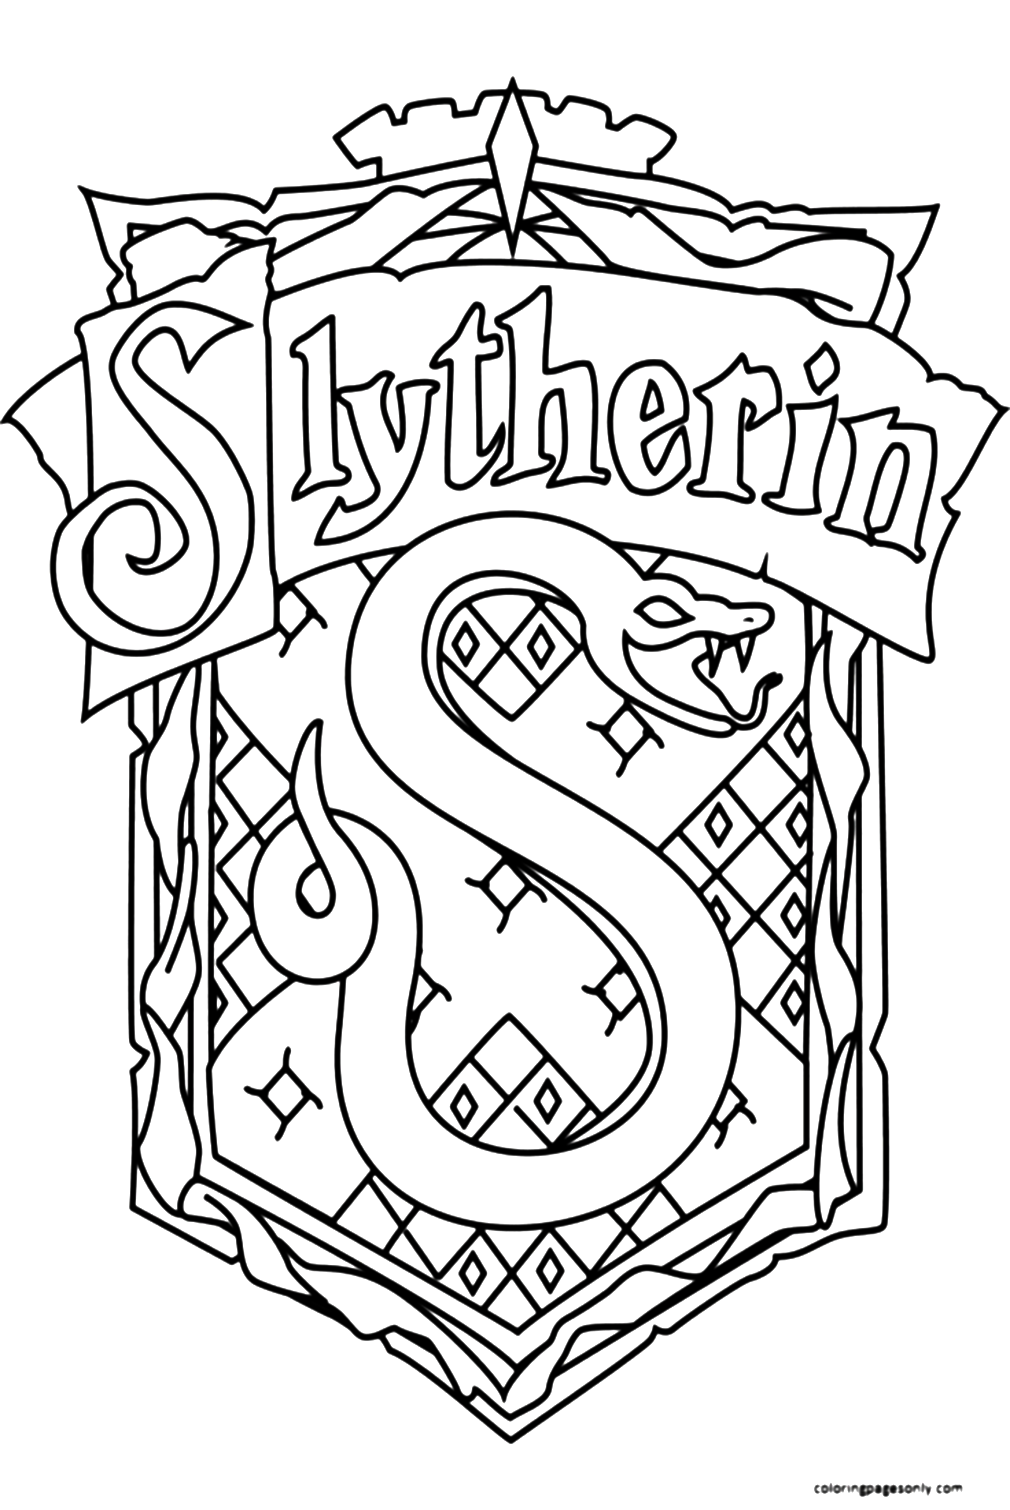 Símbolo de Slytherin de Harry Potter